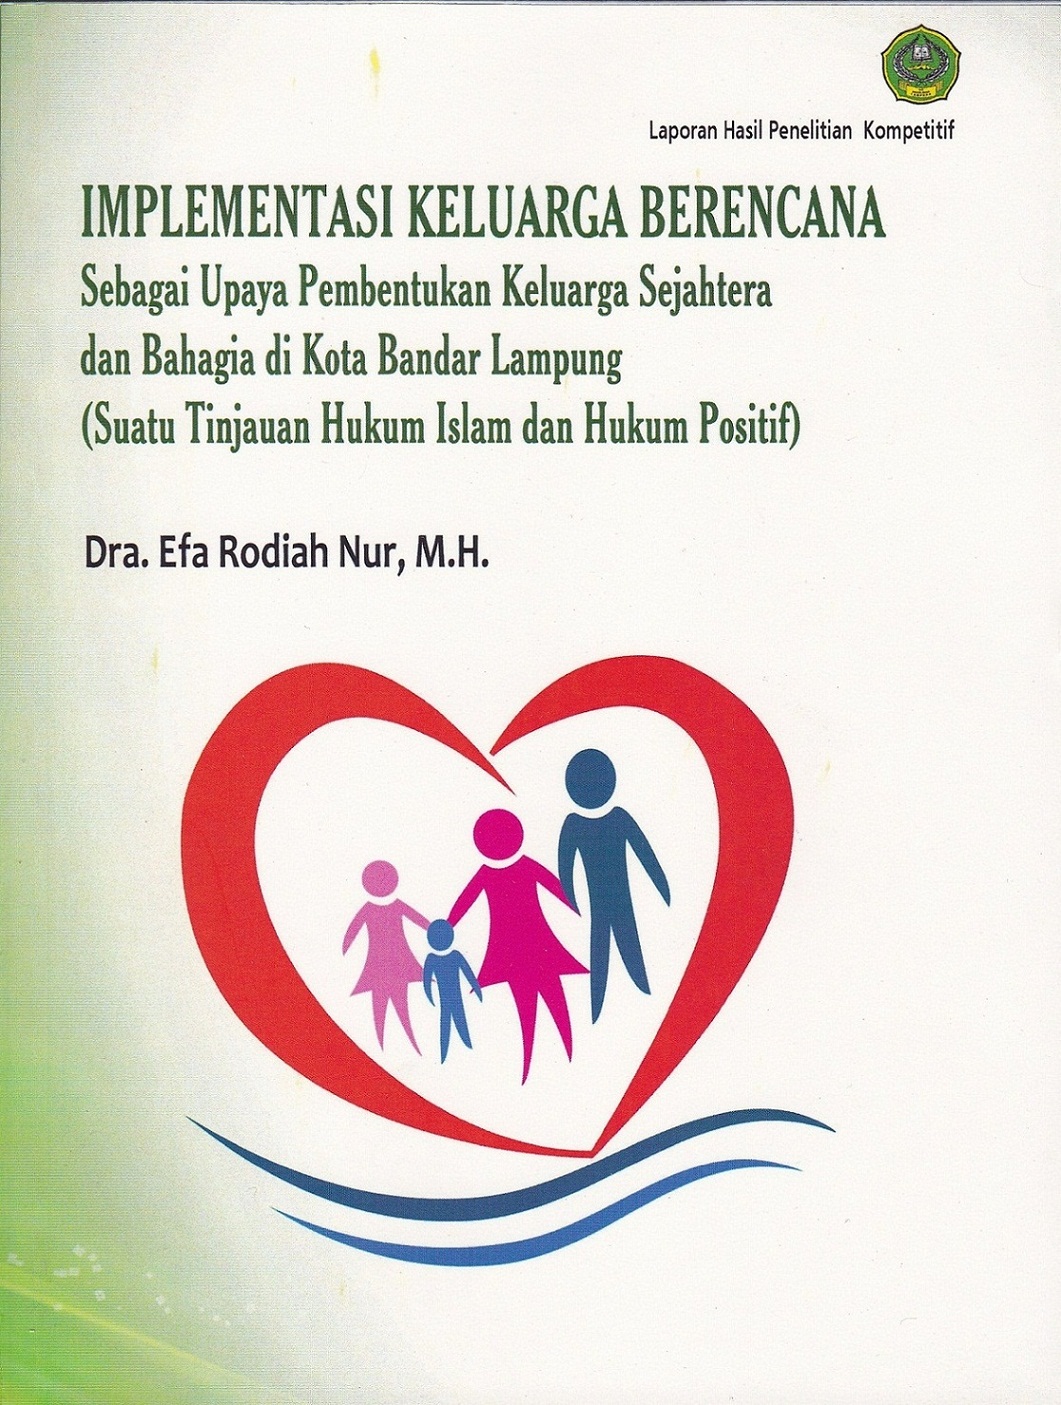 Implementasi keluarga berencana sebagai upaya pembentukan keluarga sejahtera dan bahagia di Kota Bandar Lampung (Suatu tinjauan hukum islam dan hukum positif)